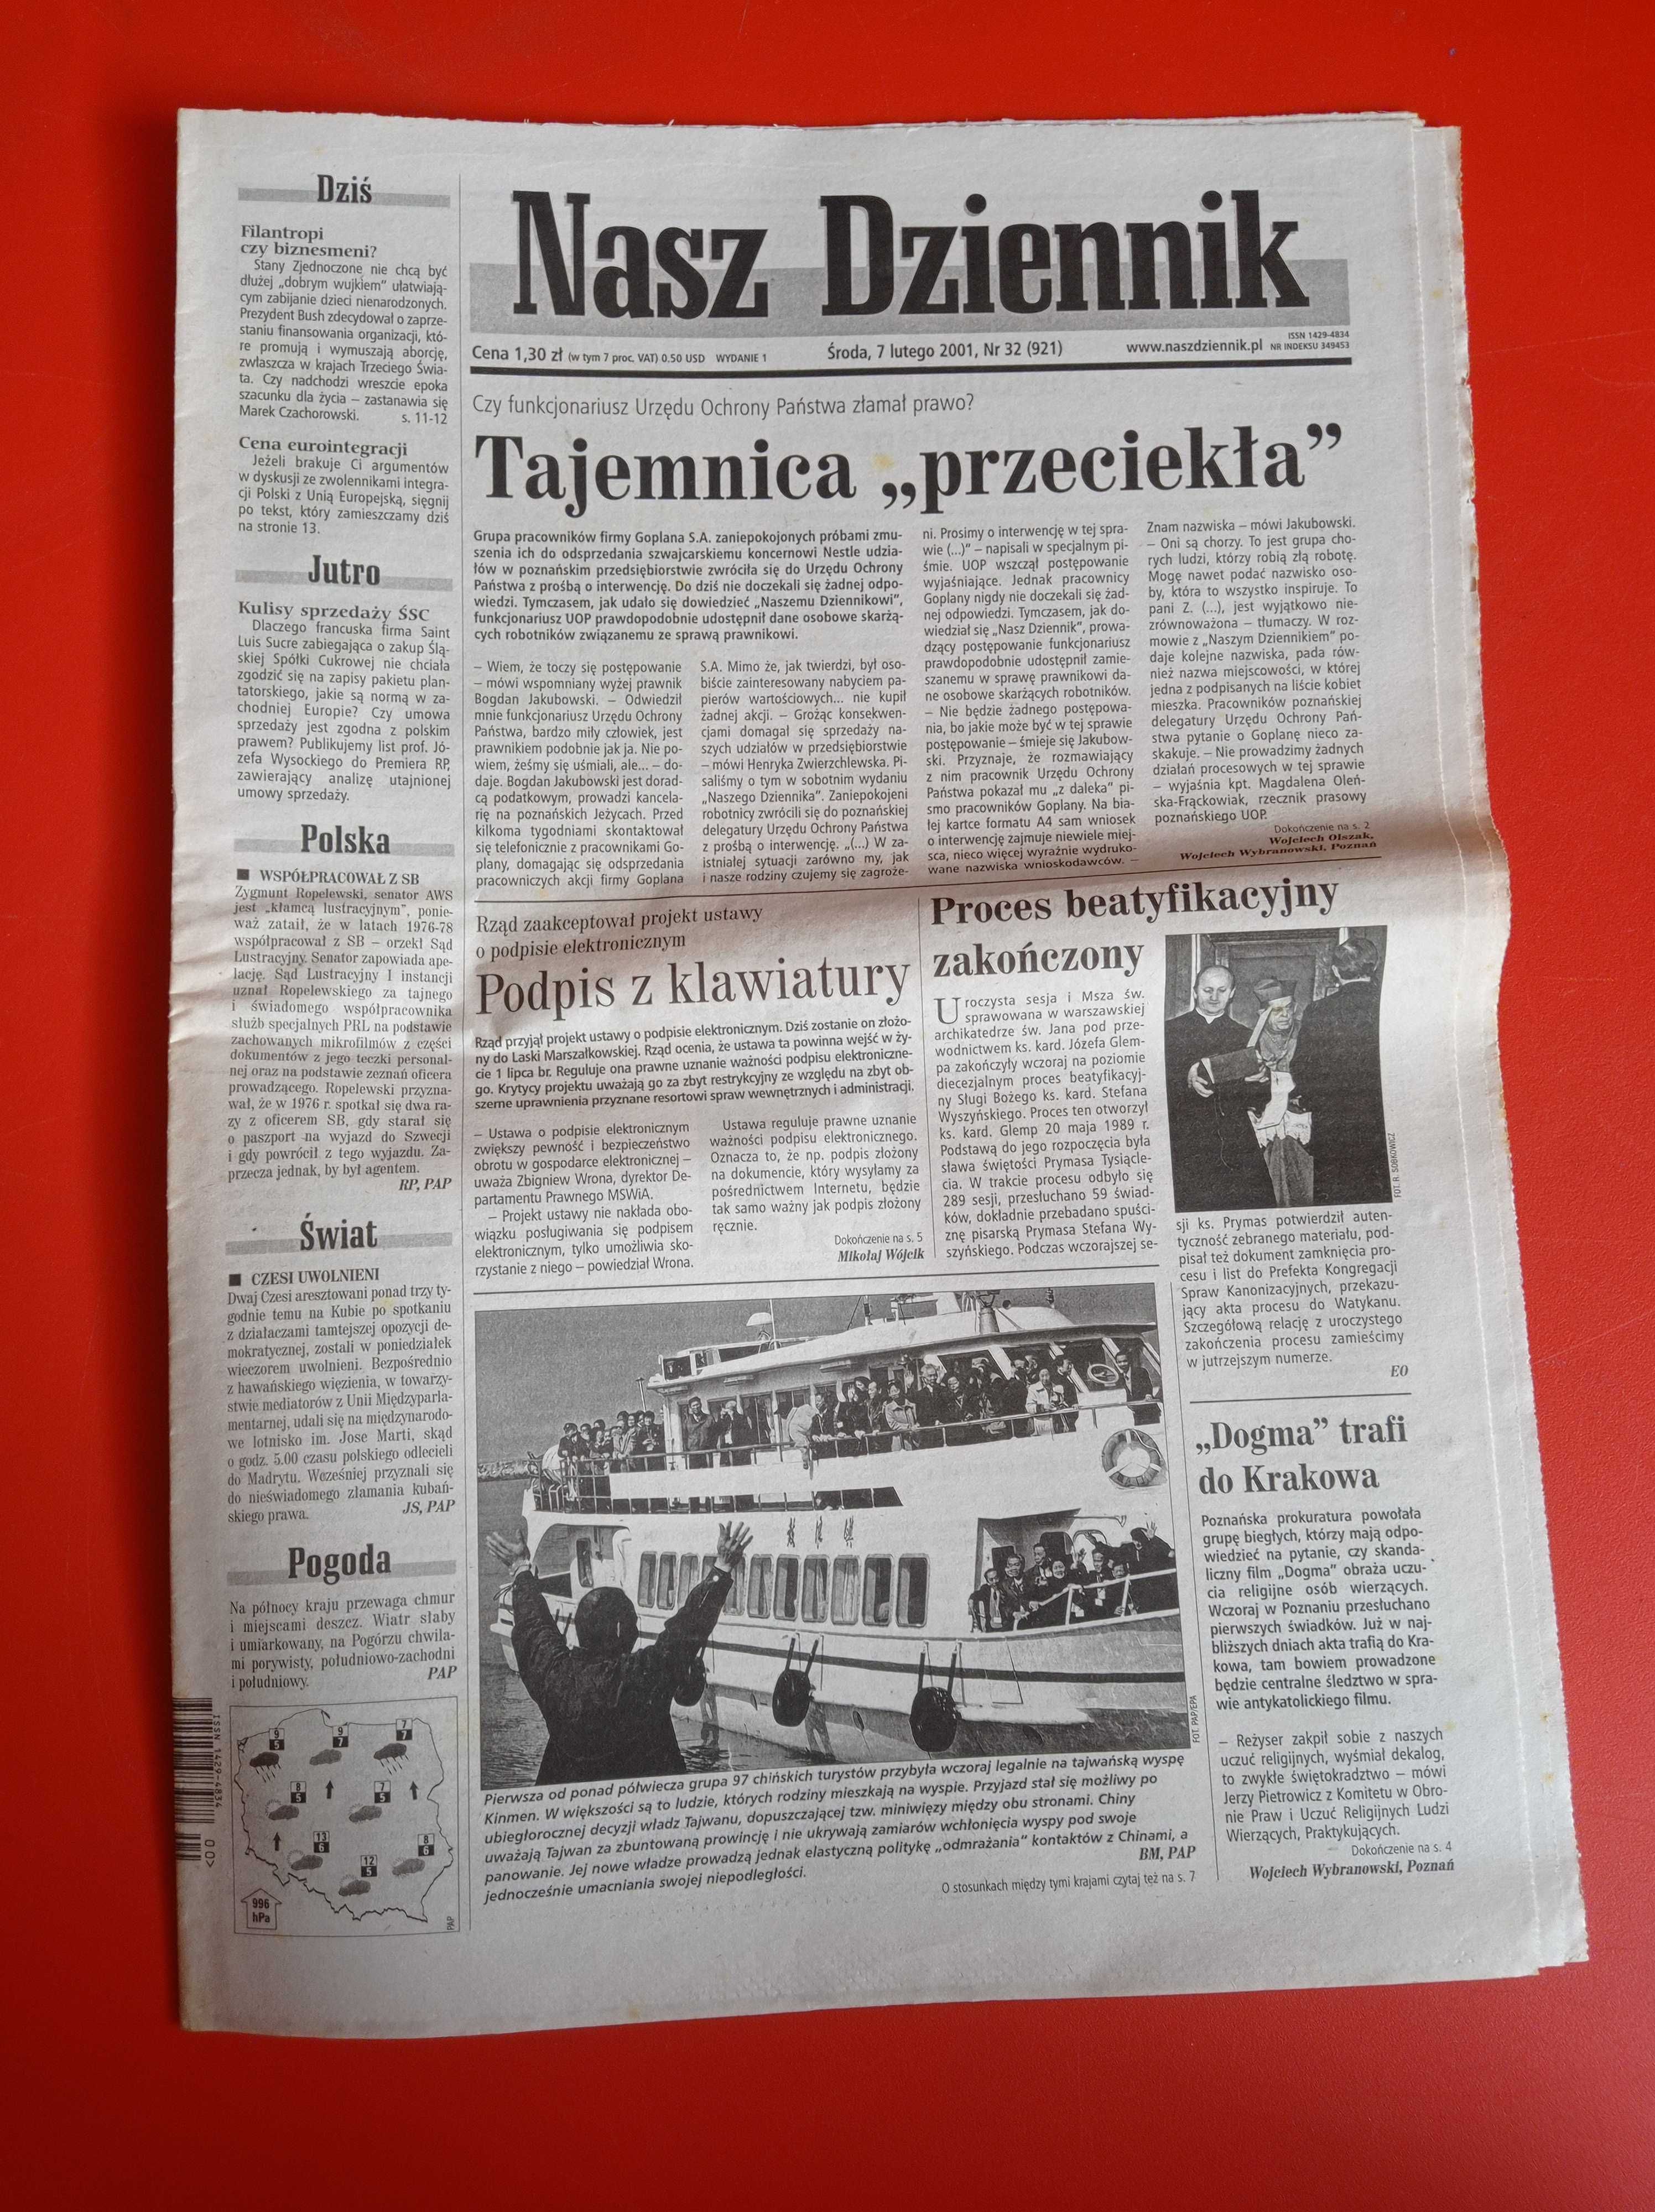 Nasz Dziennik, nr 32/2001, 7 lutego 2001